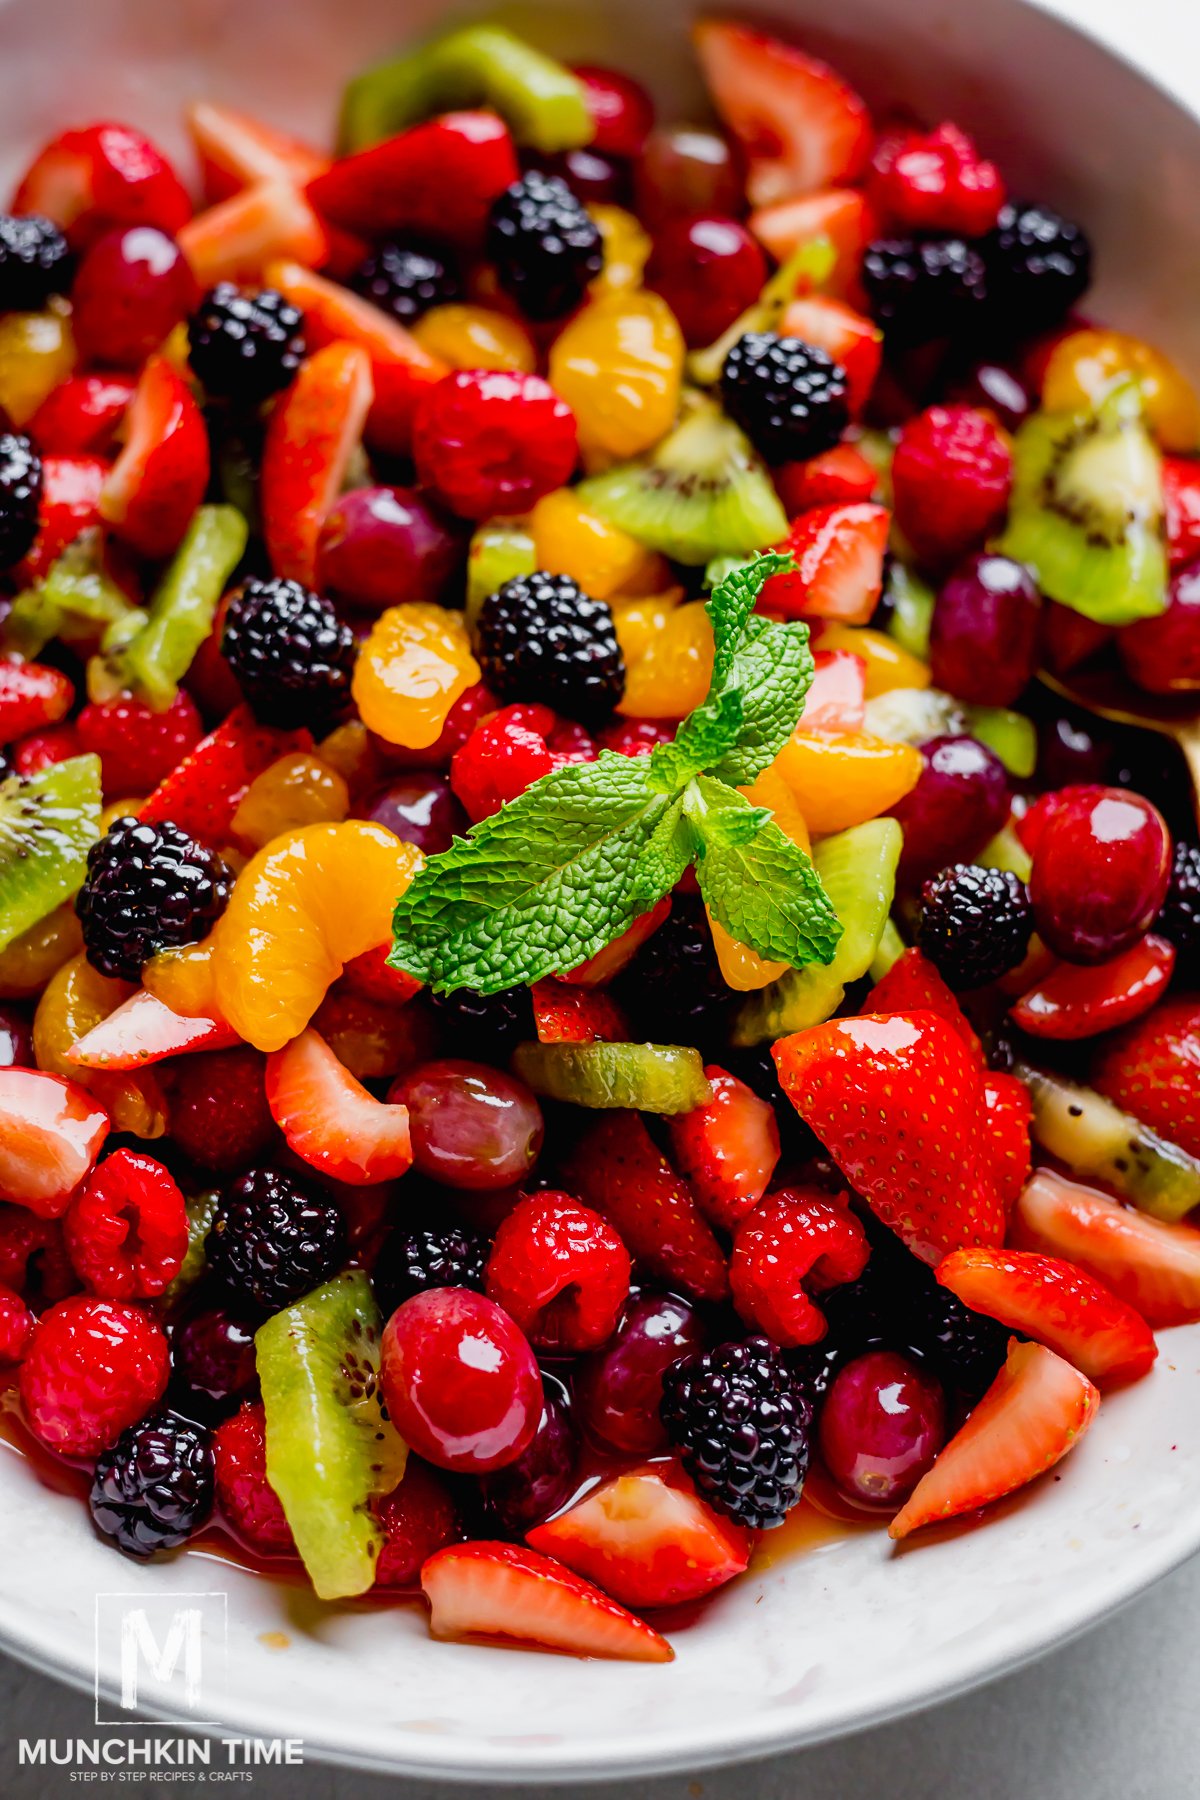 15-Minute Breakfast Fruit Salad Recipe